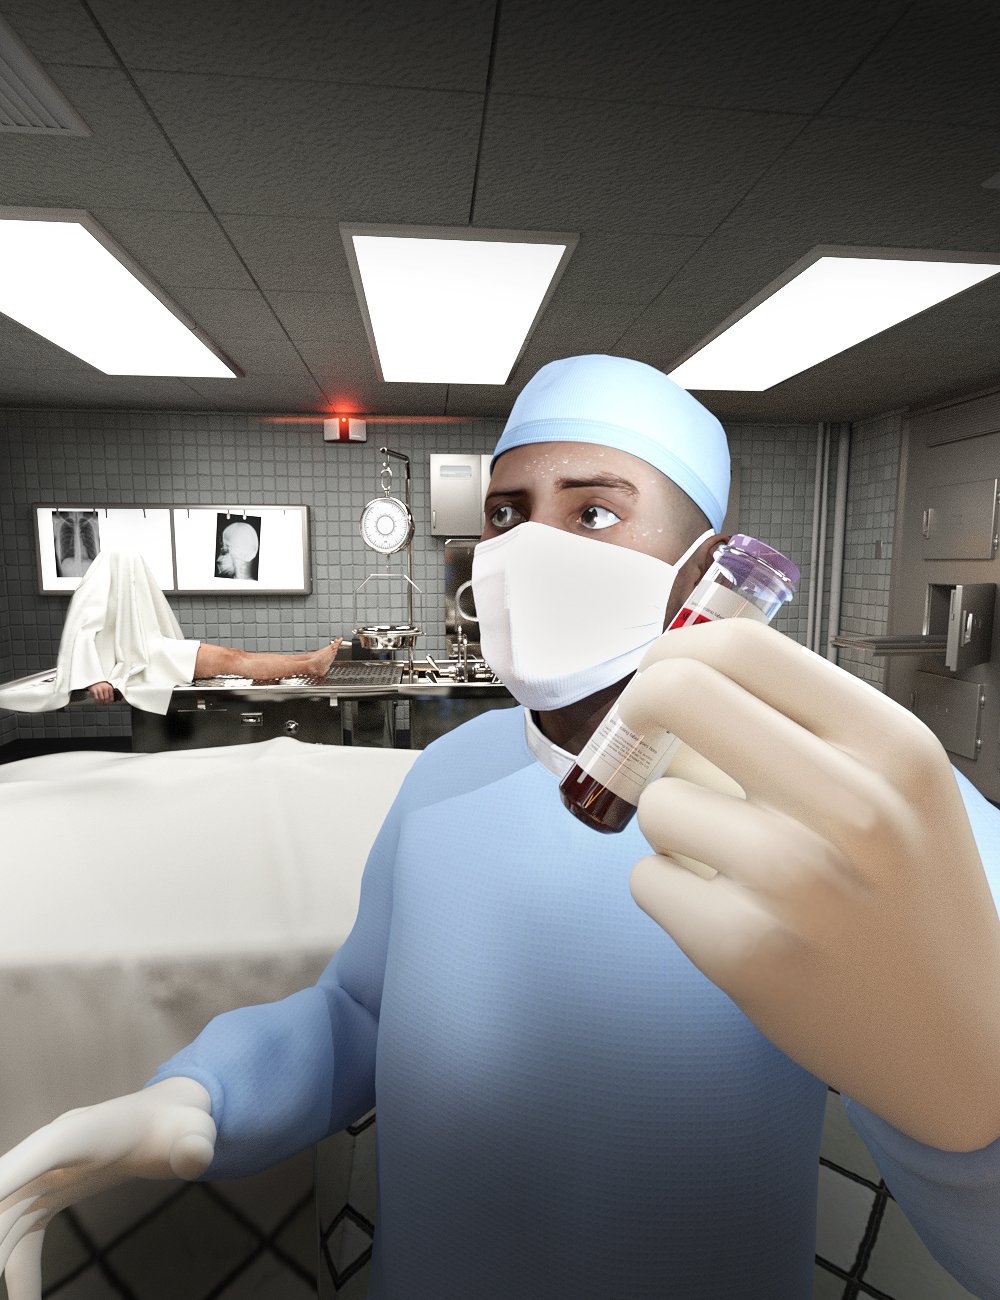 Autopsy by: The AntFarm, 3D Models by Daz 3D